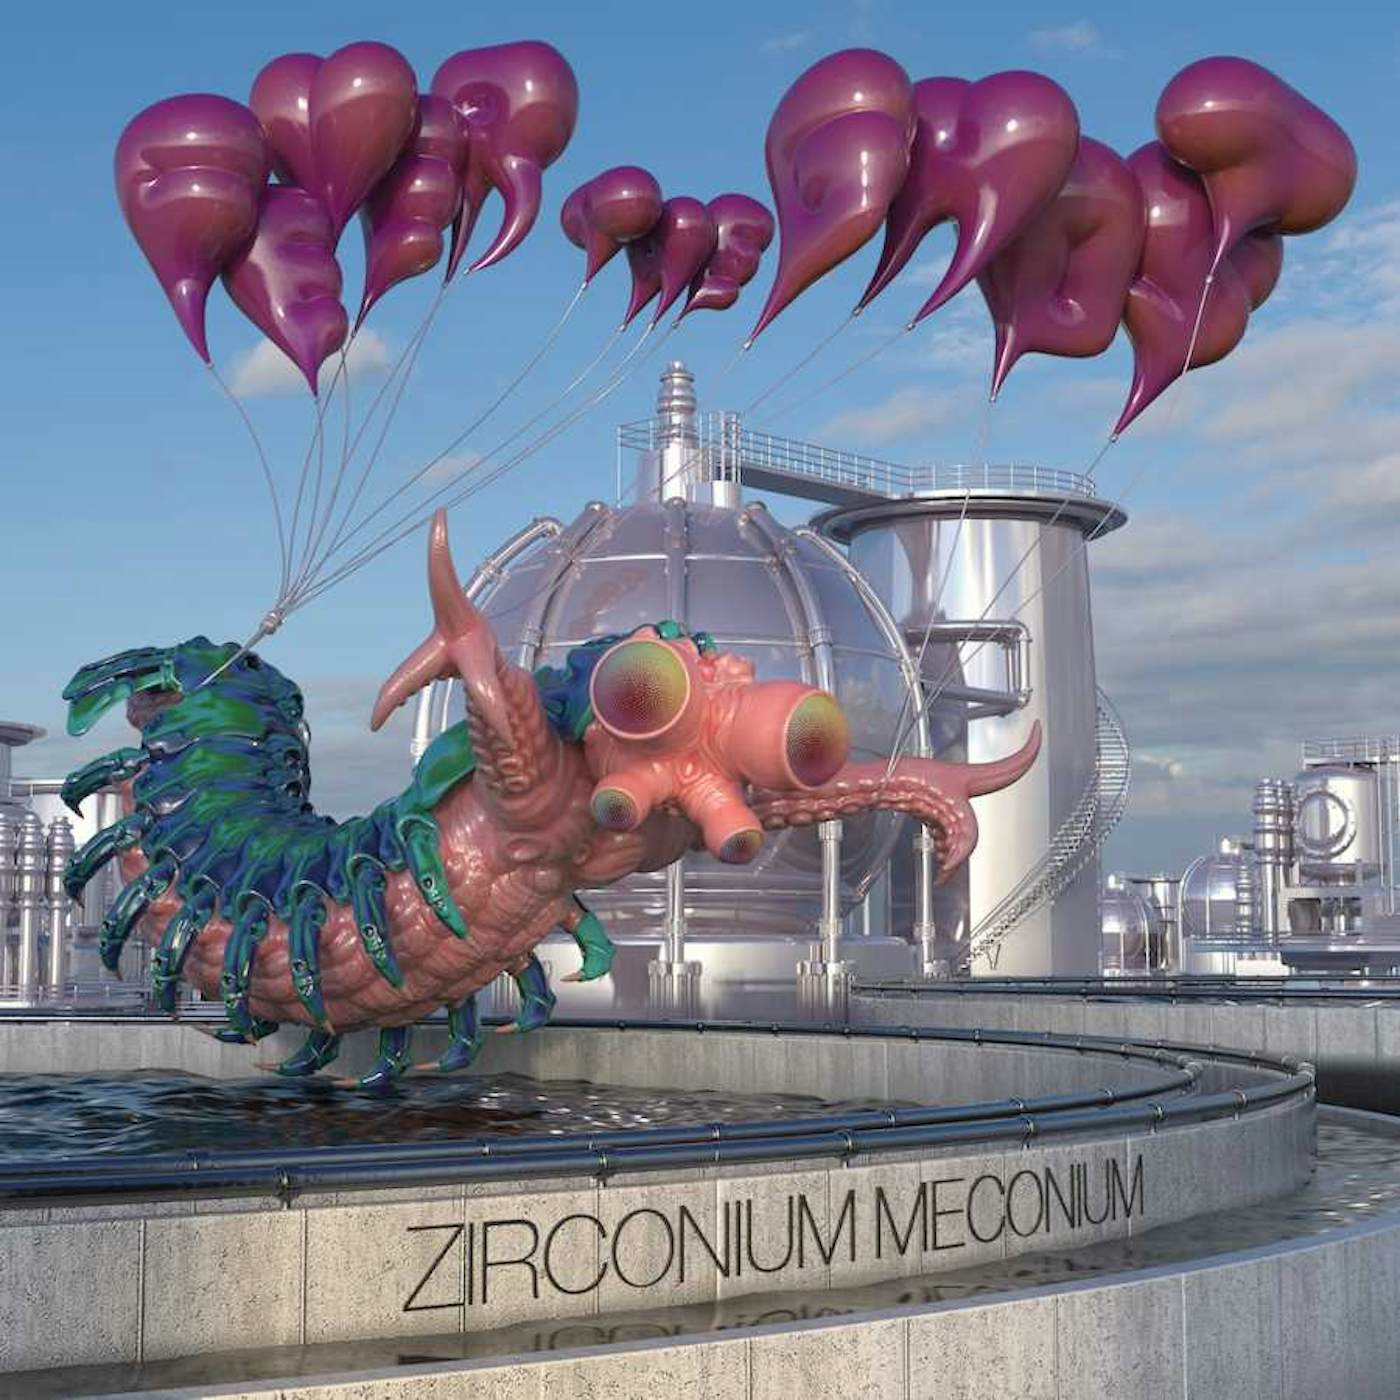 Fever the Ghost Zirconium Meconi(Lp) Vinyl Record